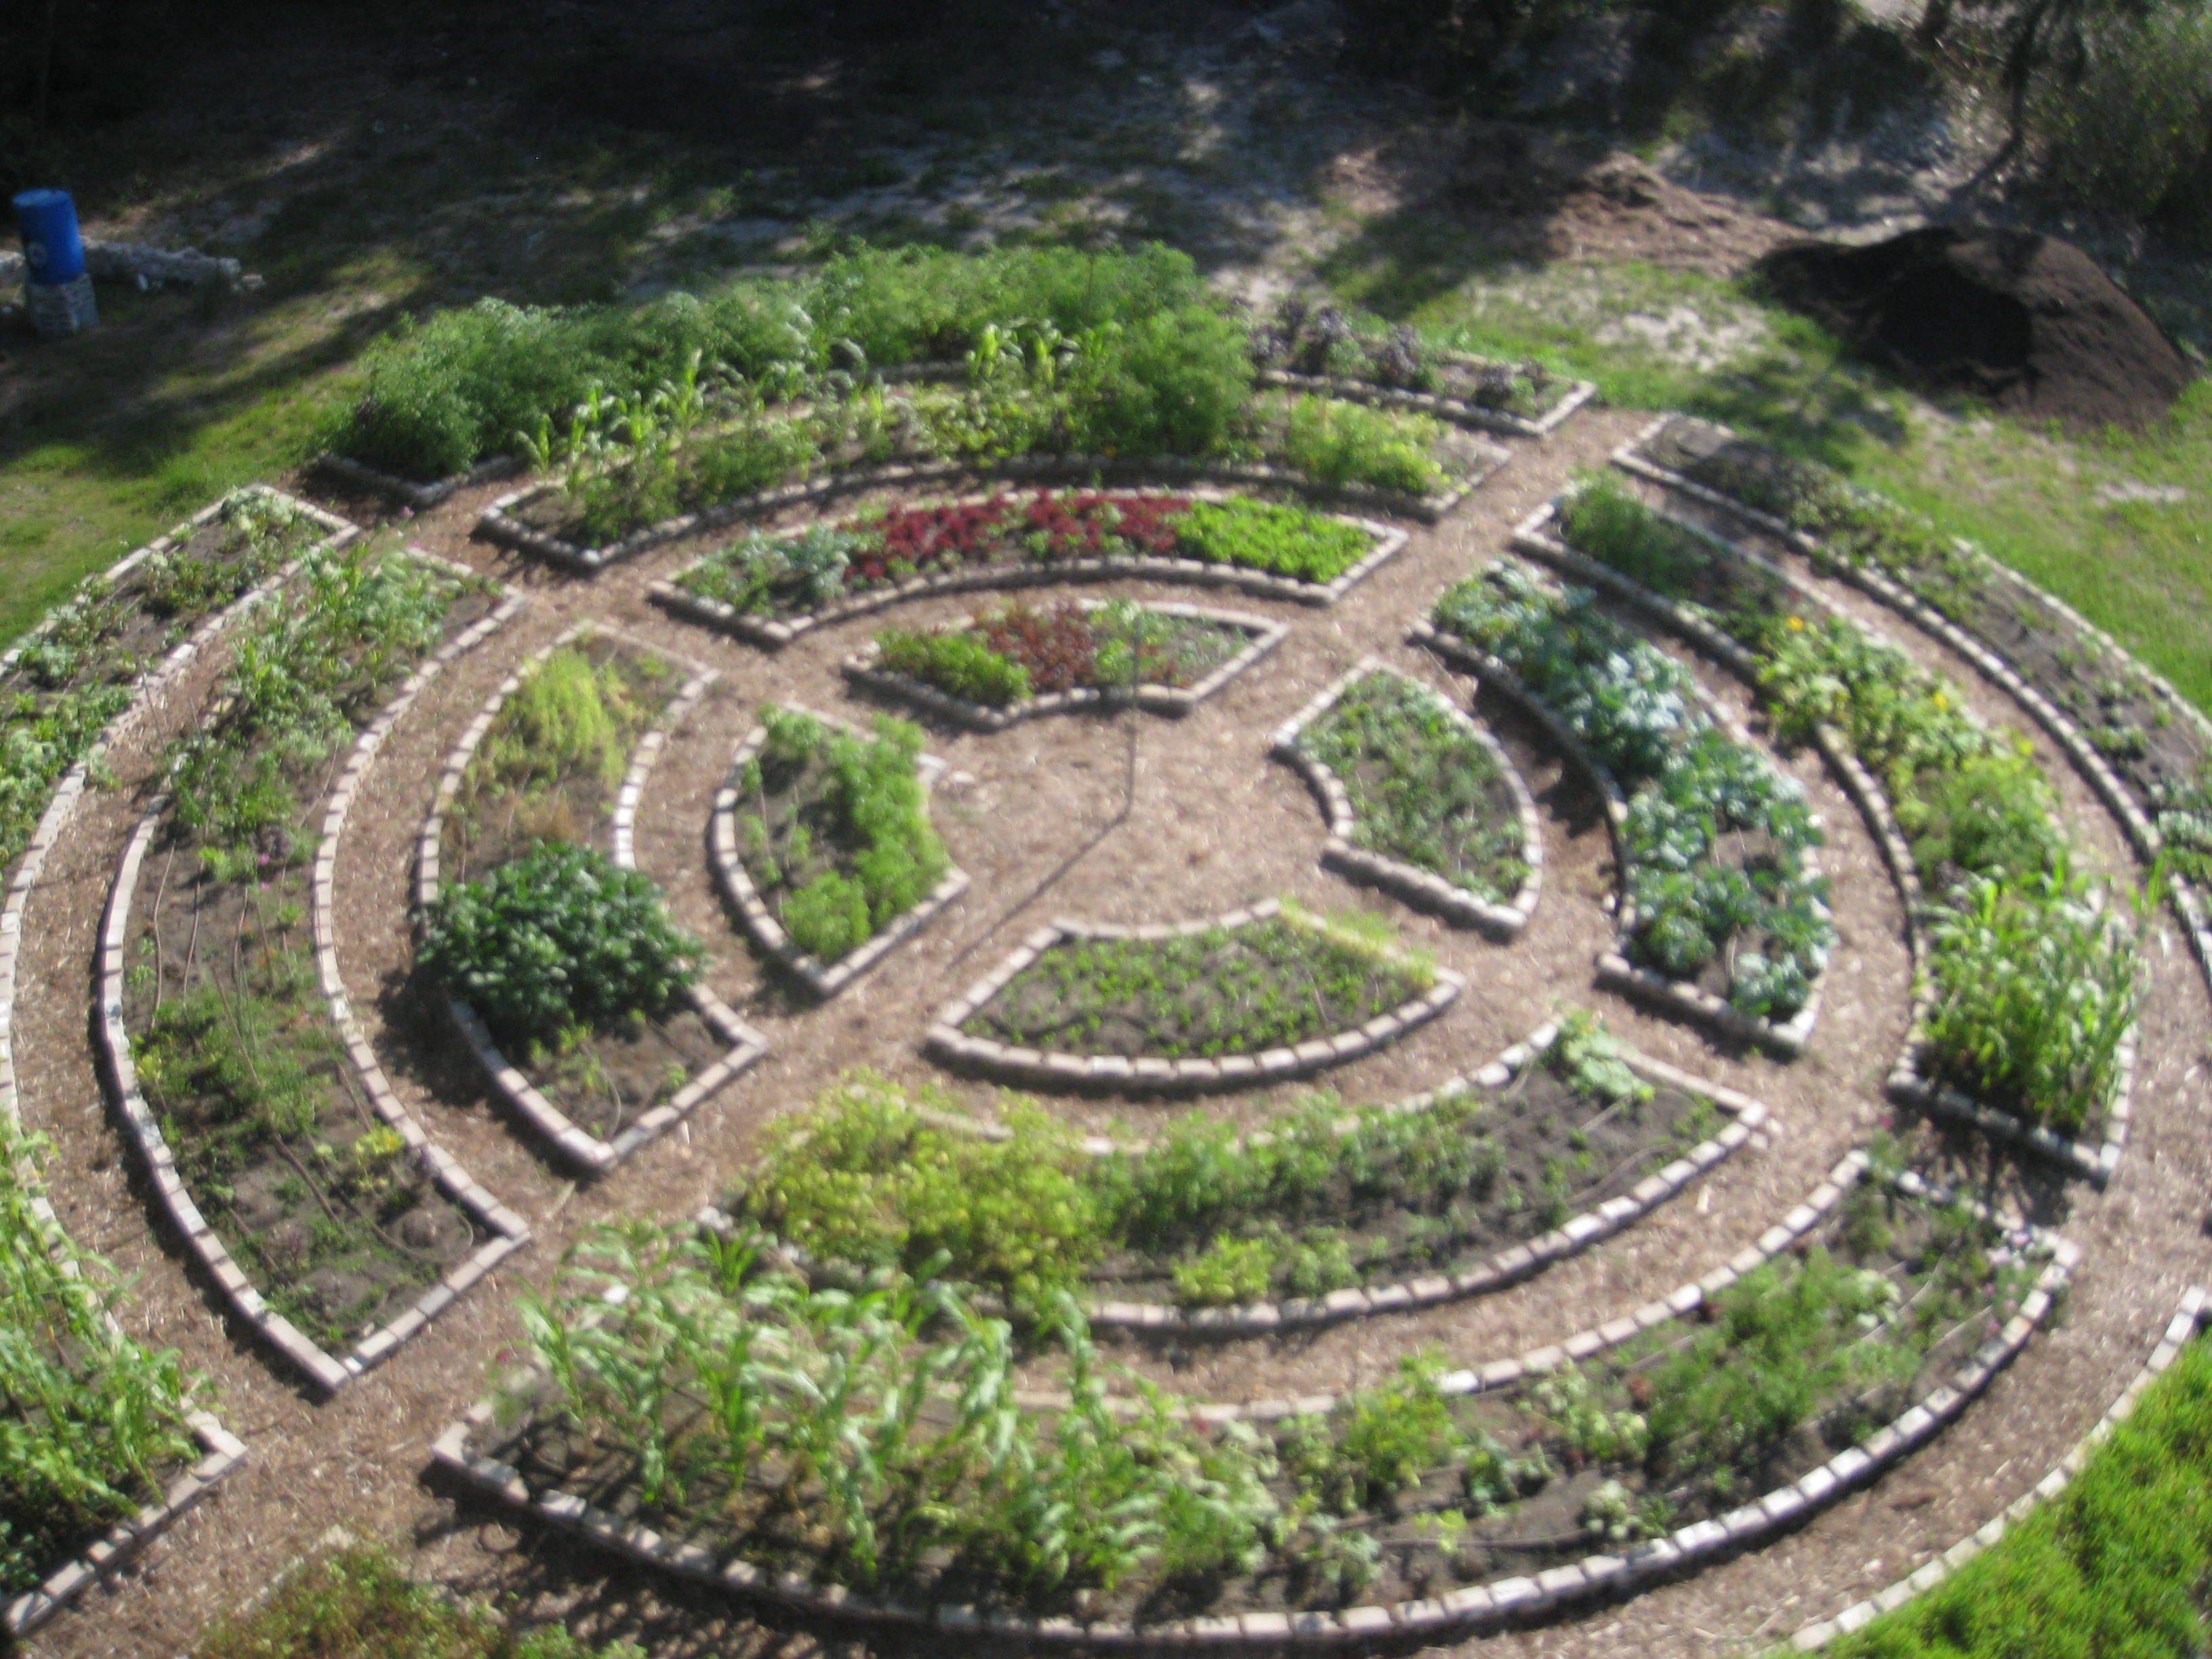 Garden Art Labyrinth Garden